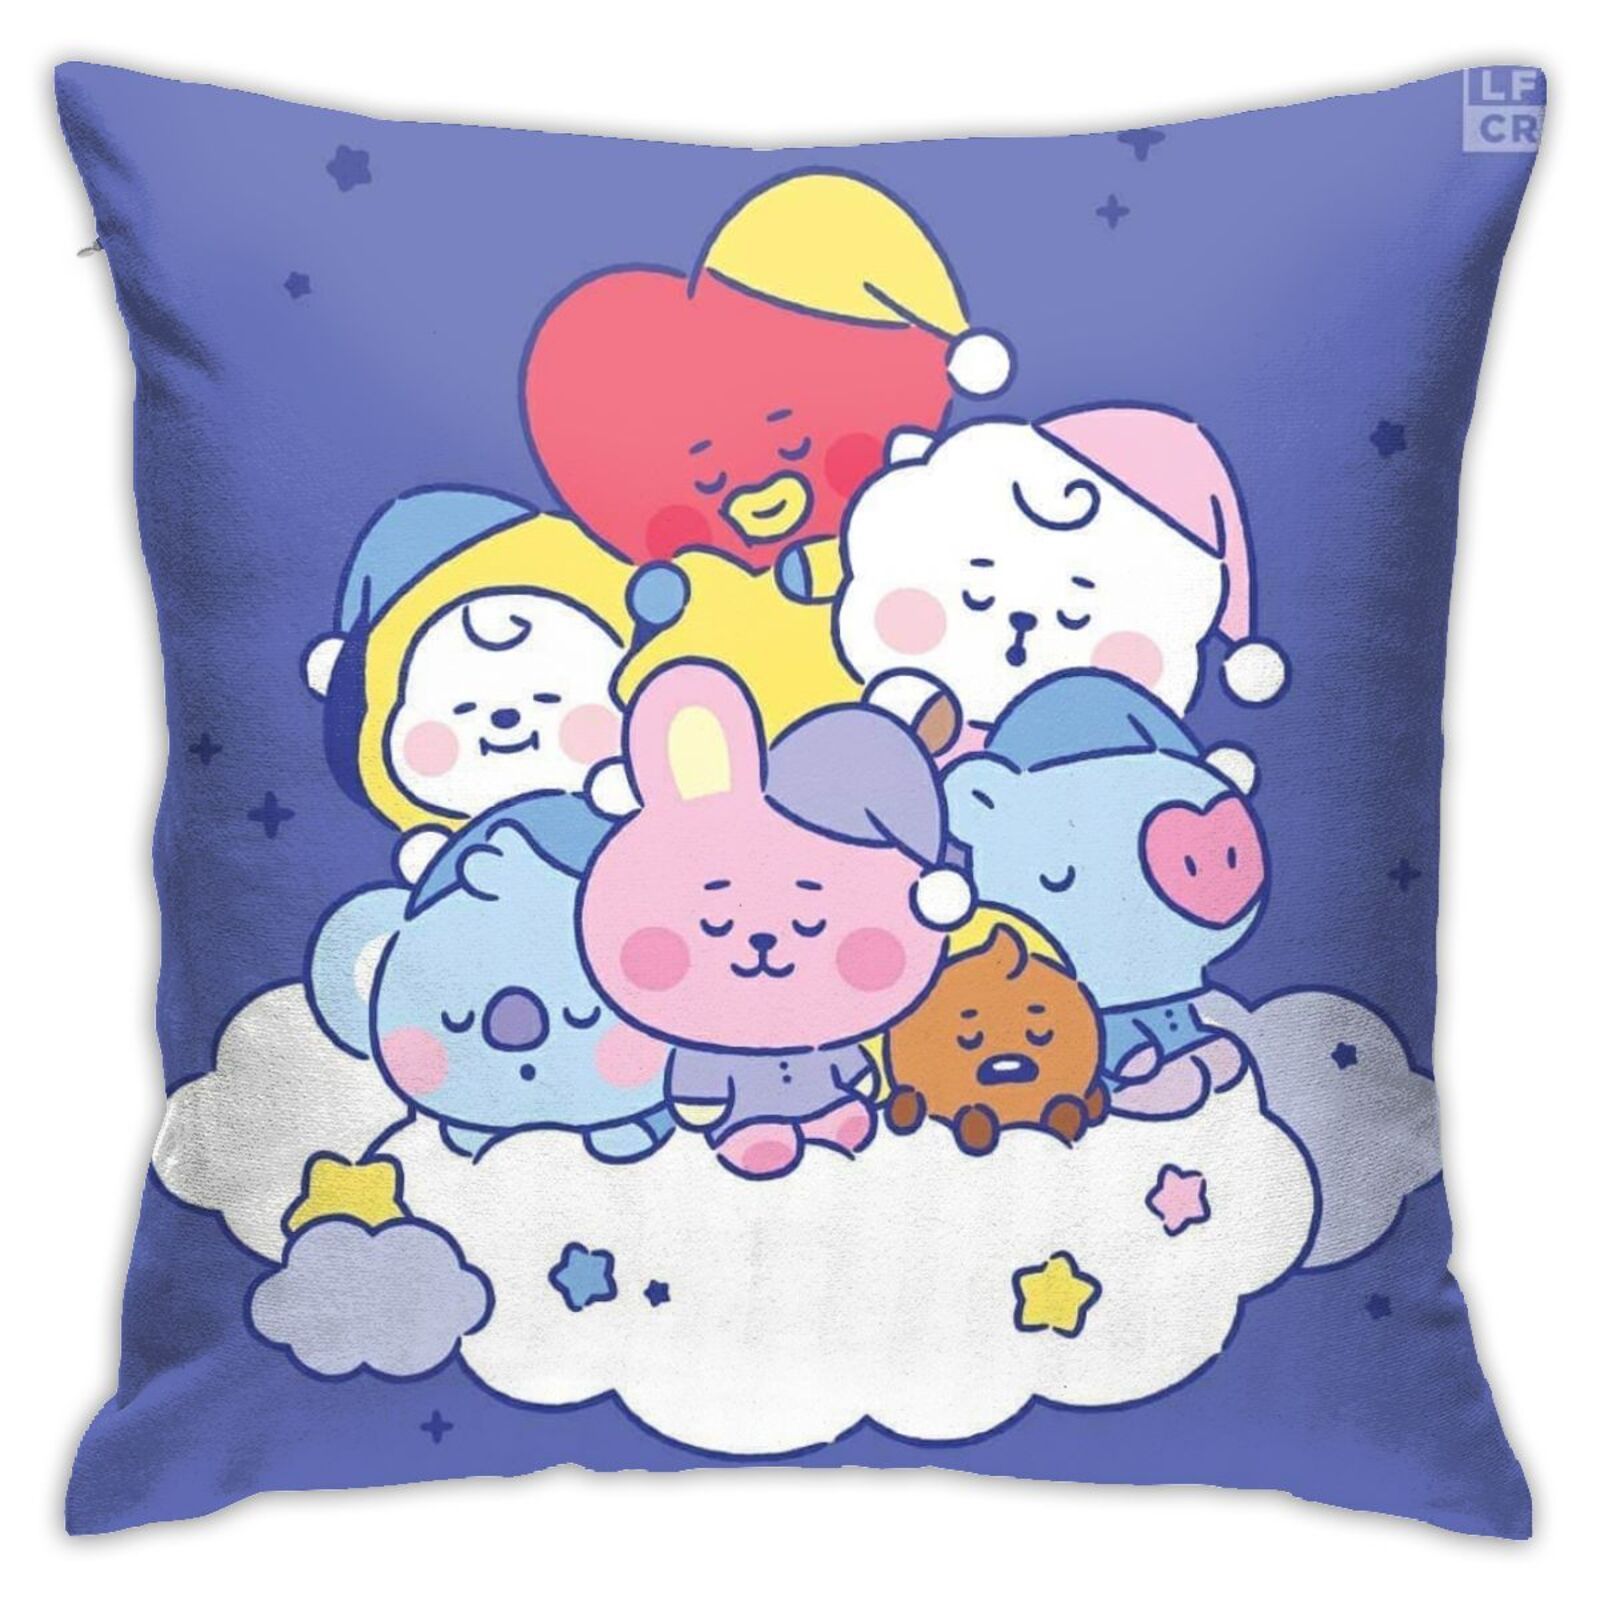 BT21 A Dream of Baby Sleeping Cushion - BTS Official Merch